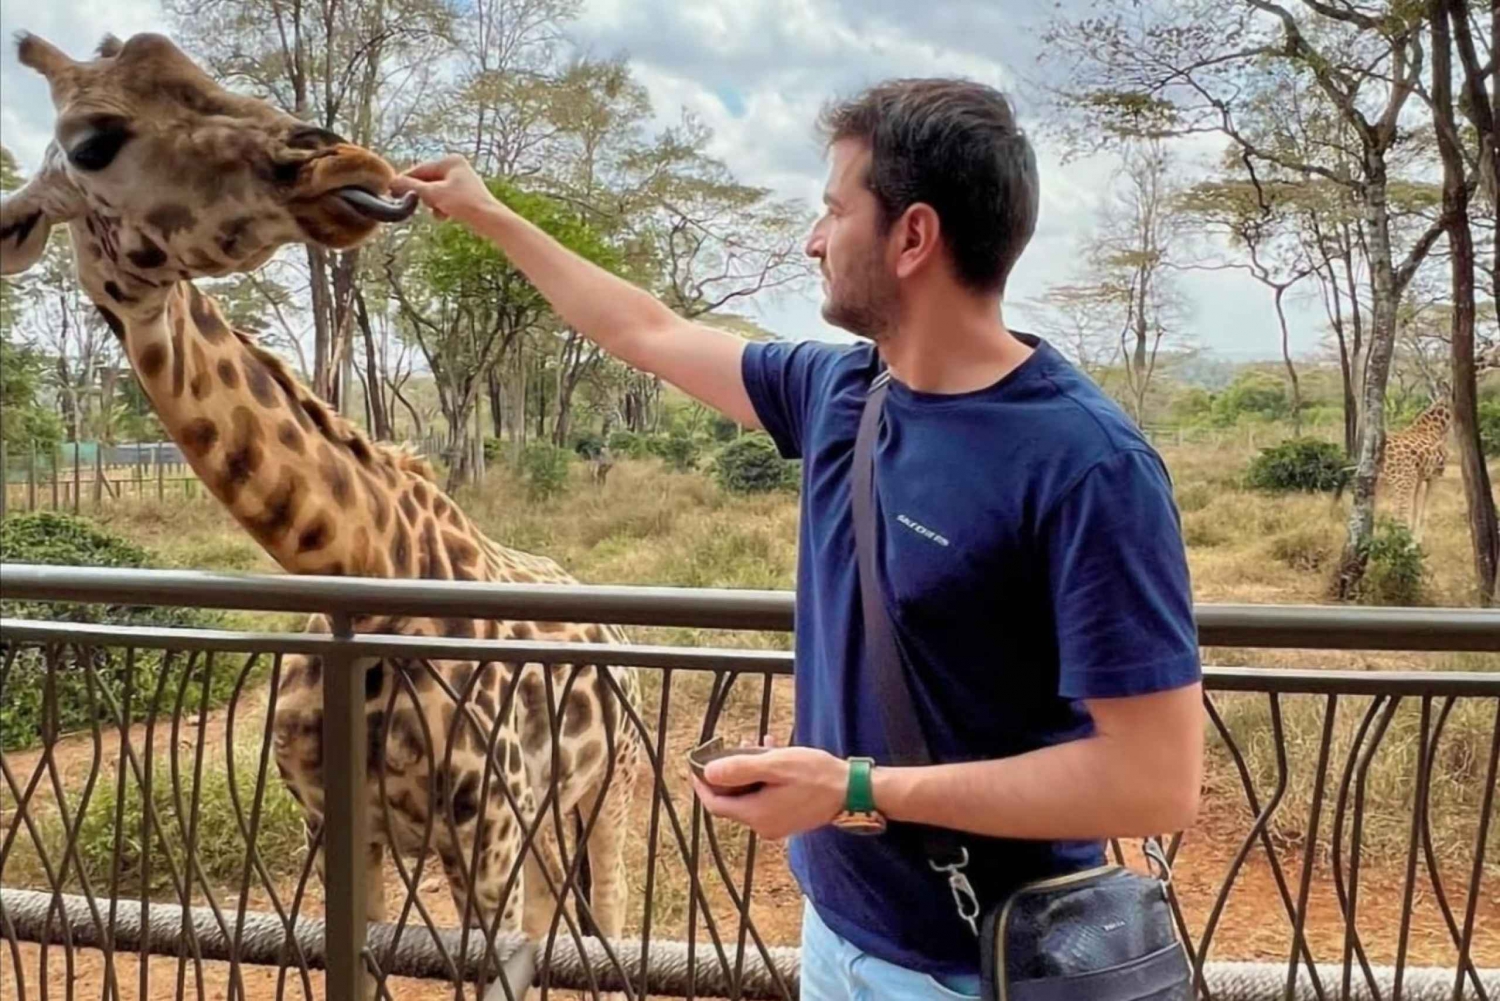 Nairobi park And Giraffe Center.